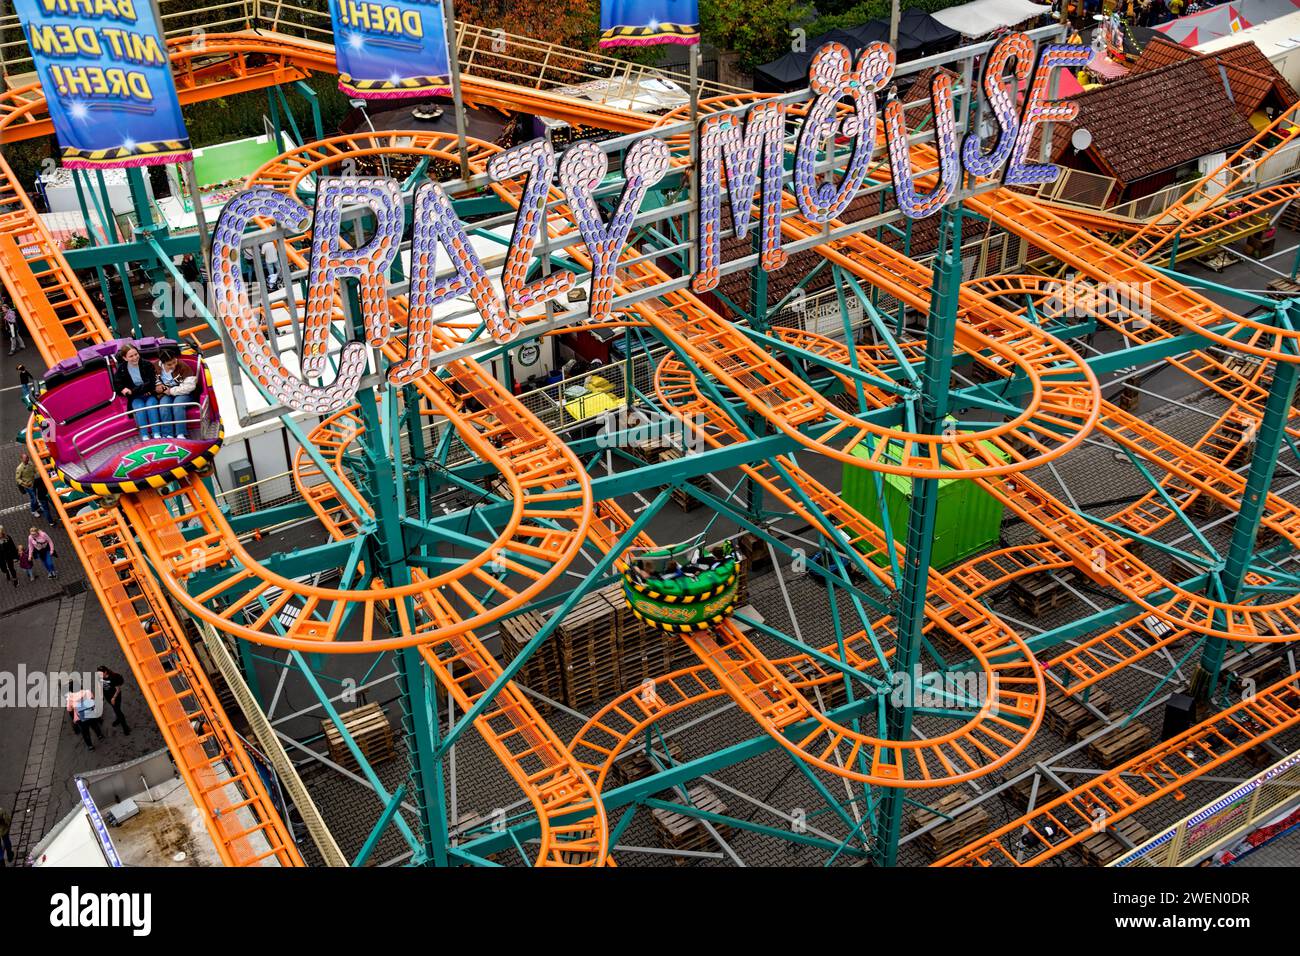 Roller coaster Crazy Mouse, rails, winding tracks of the railway, ride at fairground Kalter Markt, Kaale Maeaert, funfair, fairground, bird's eye Stock Photo